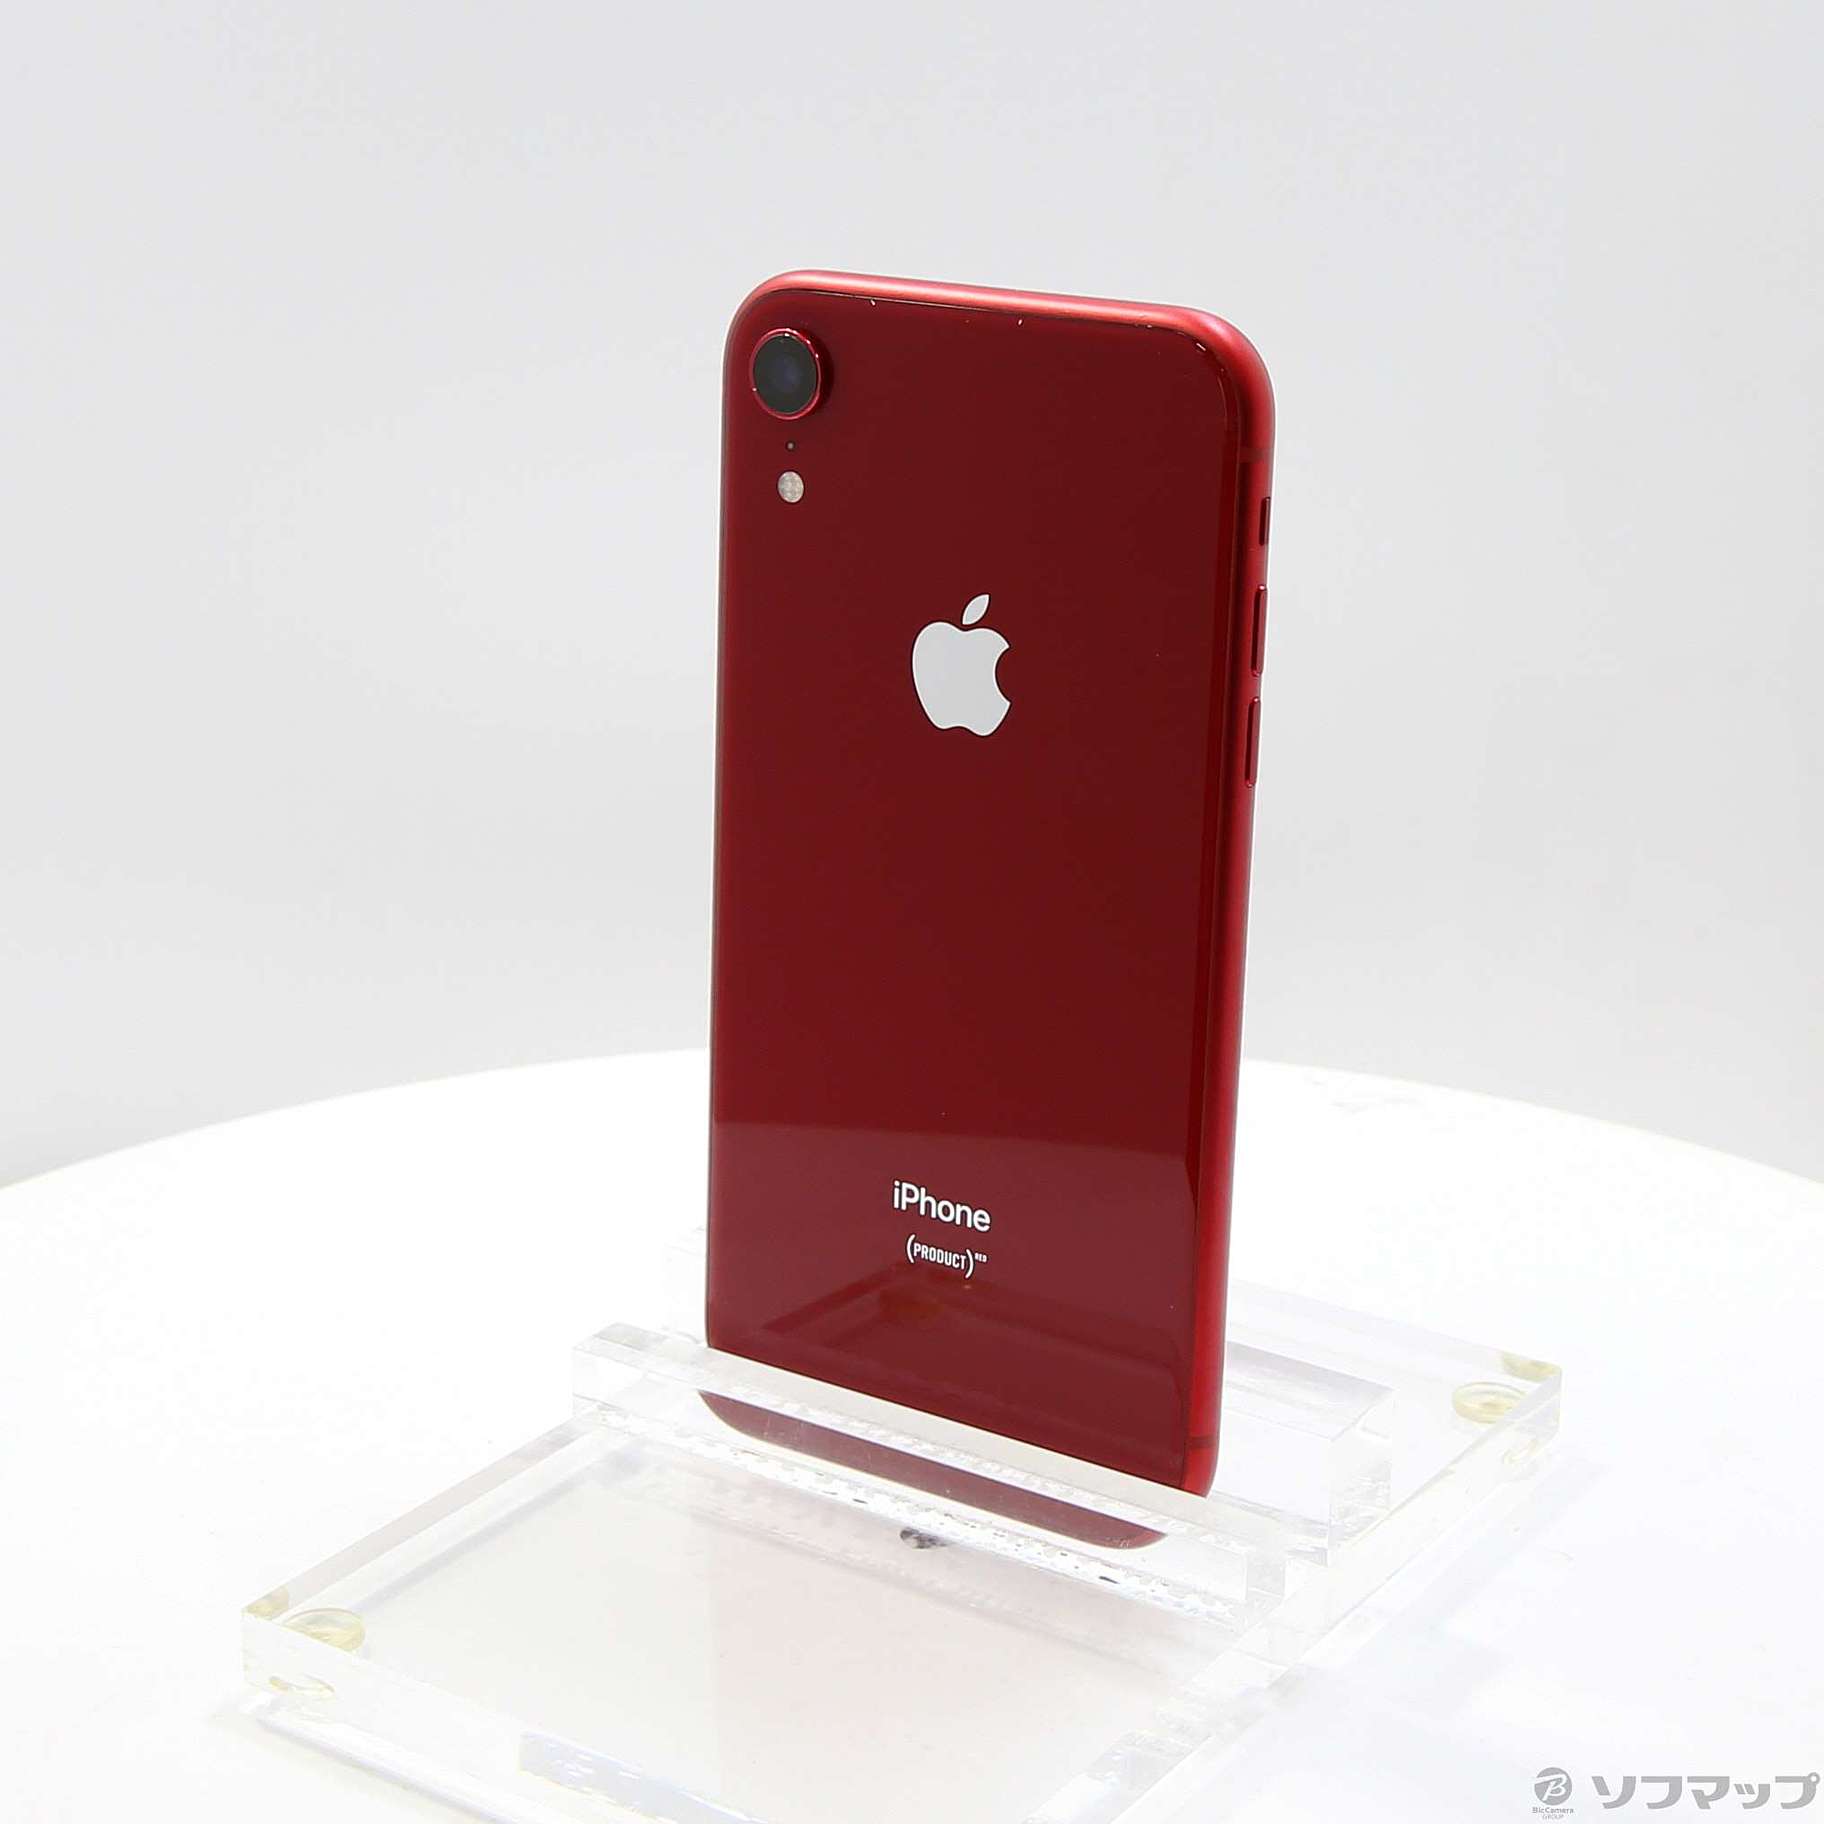 iPhone XR (PRODUCT)RED 64GB SIMフリー [レッド] 中古(白ロム)価格 